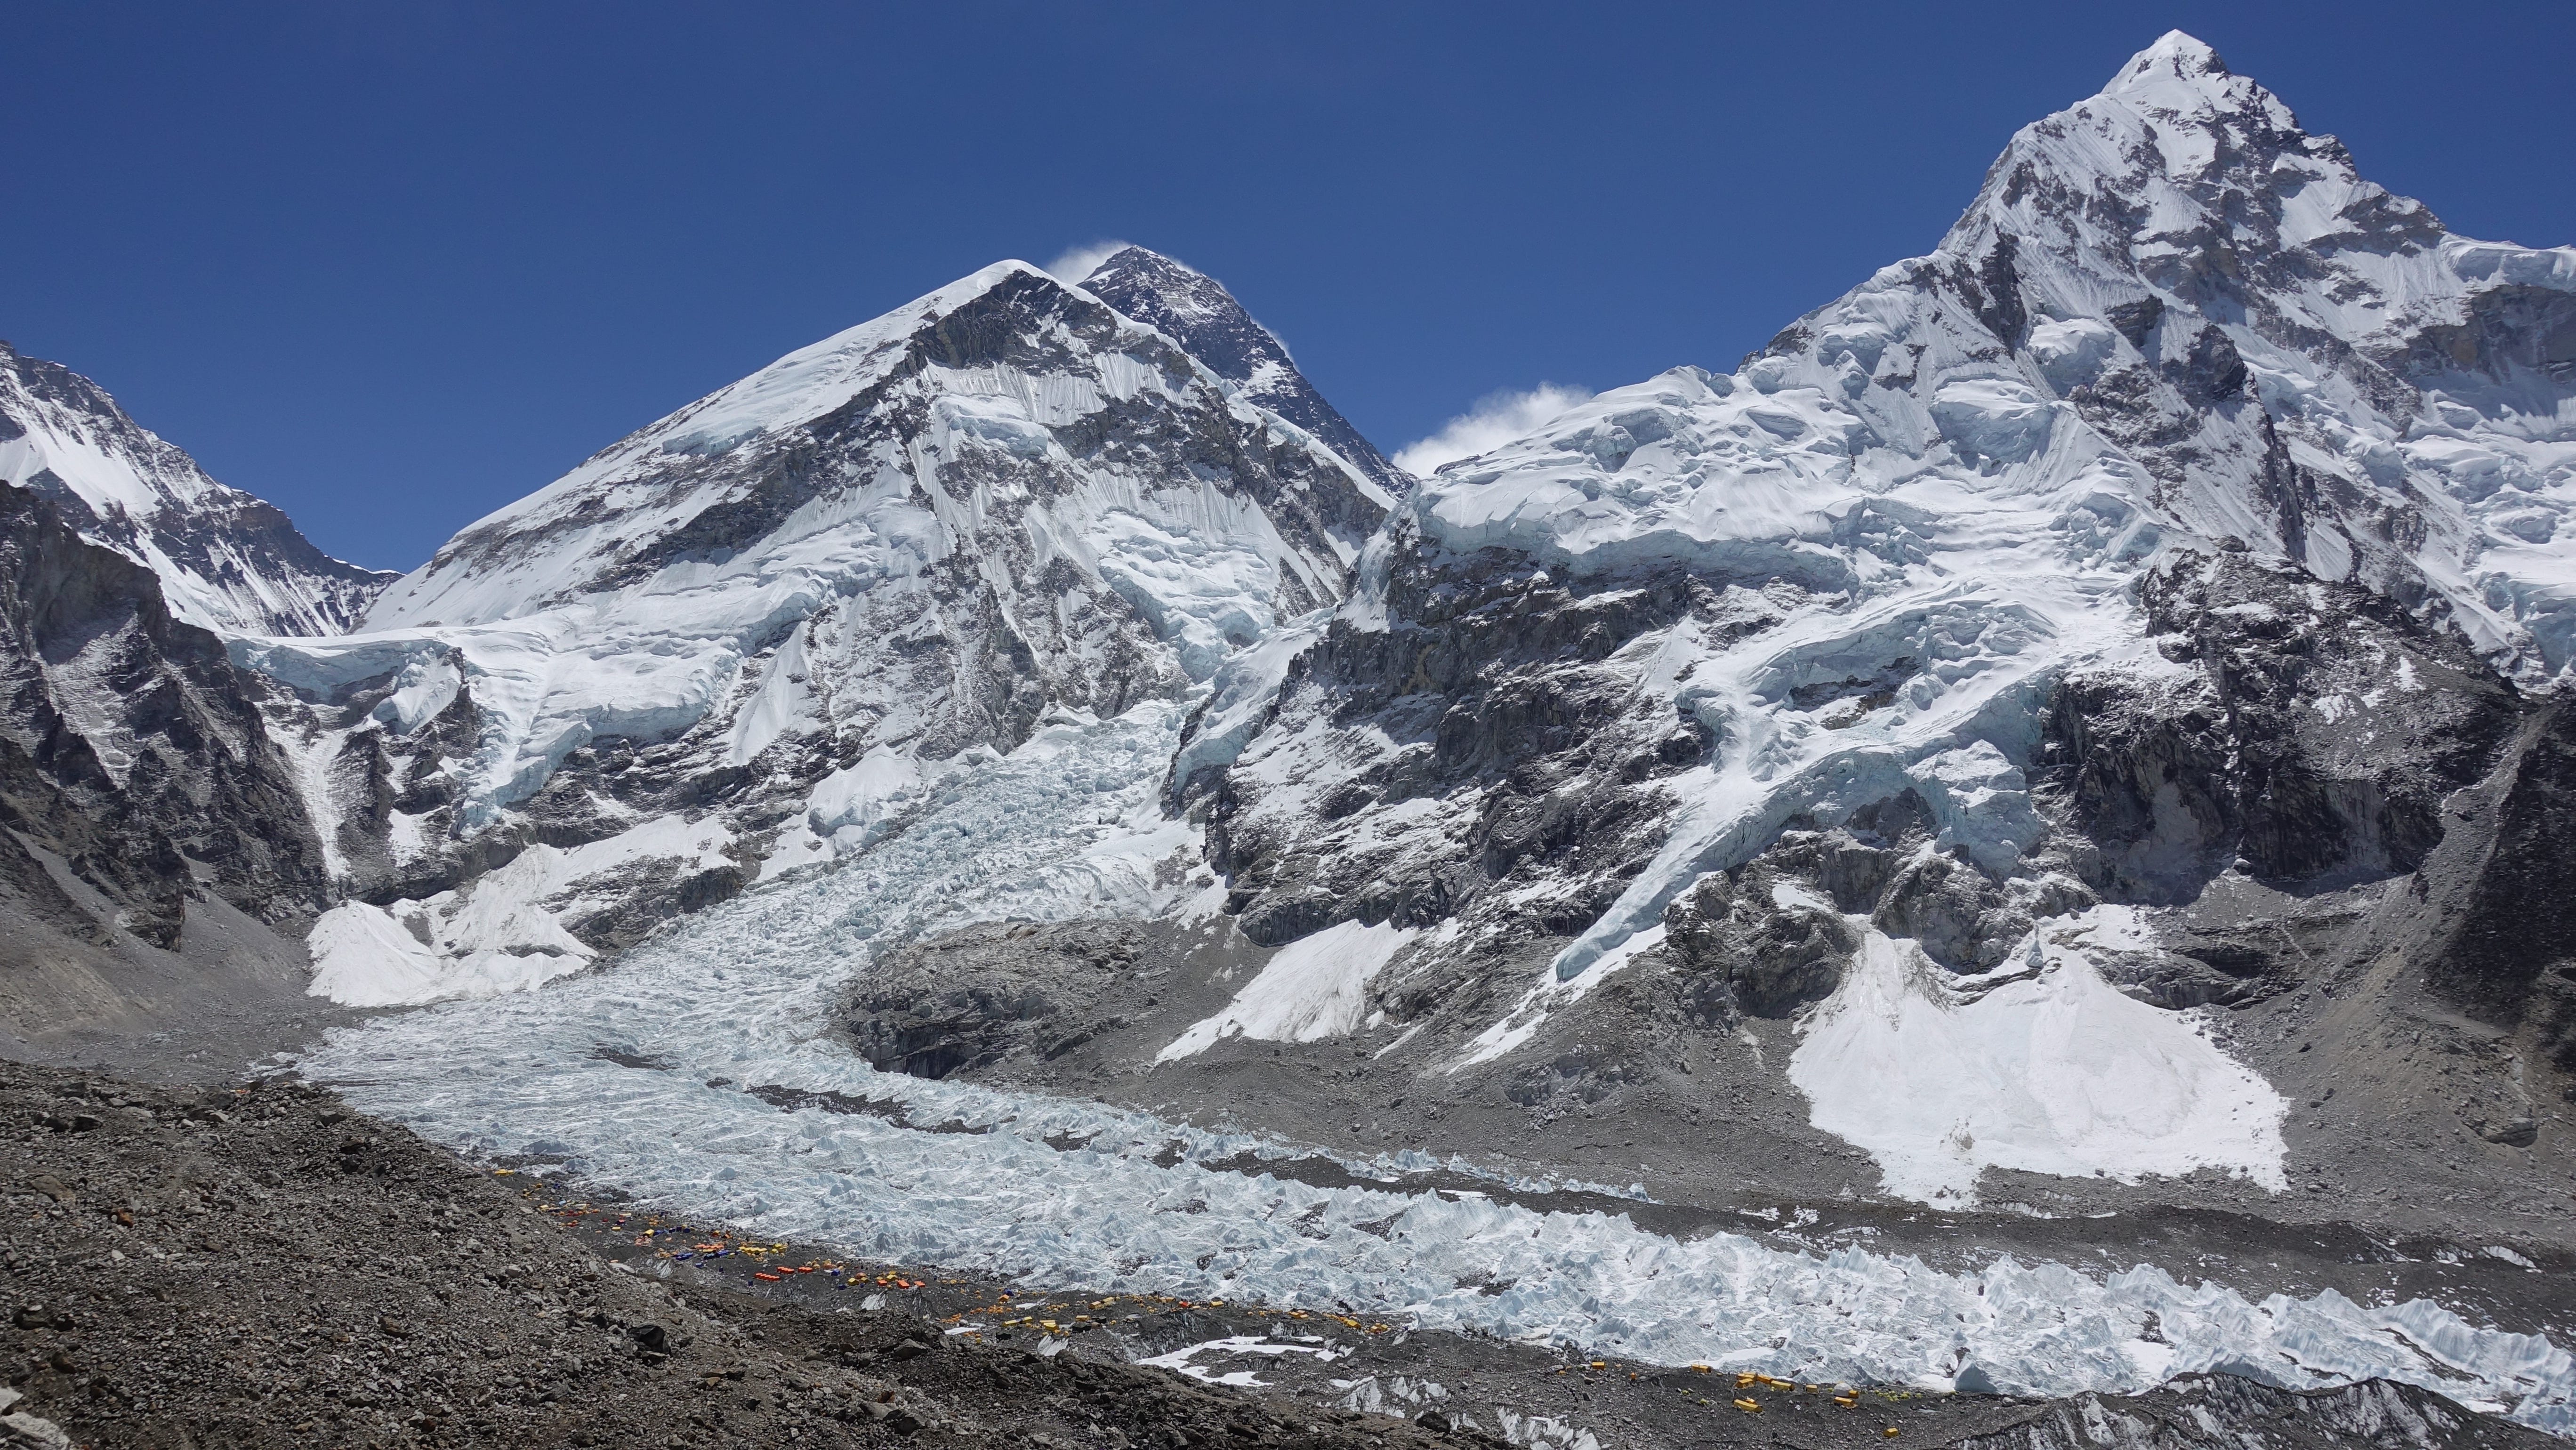 Looking across Everest base camp (lower left) up toward Mount Everest 